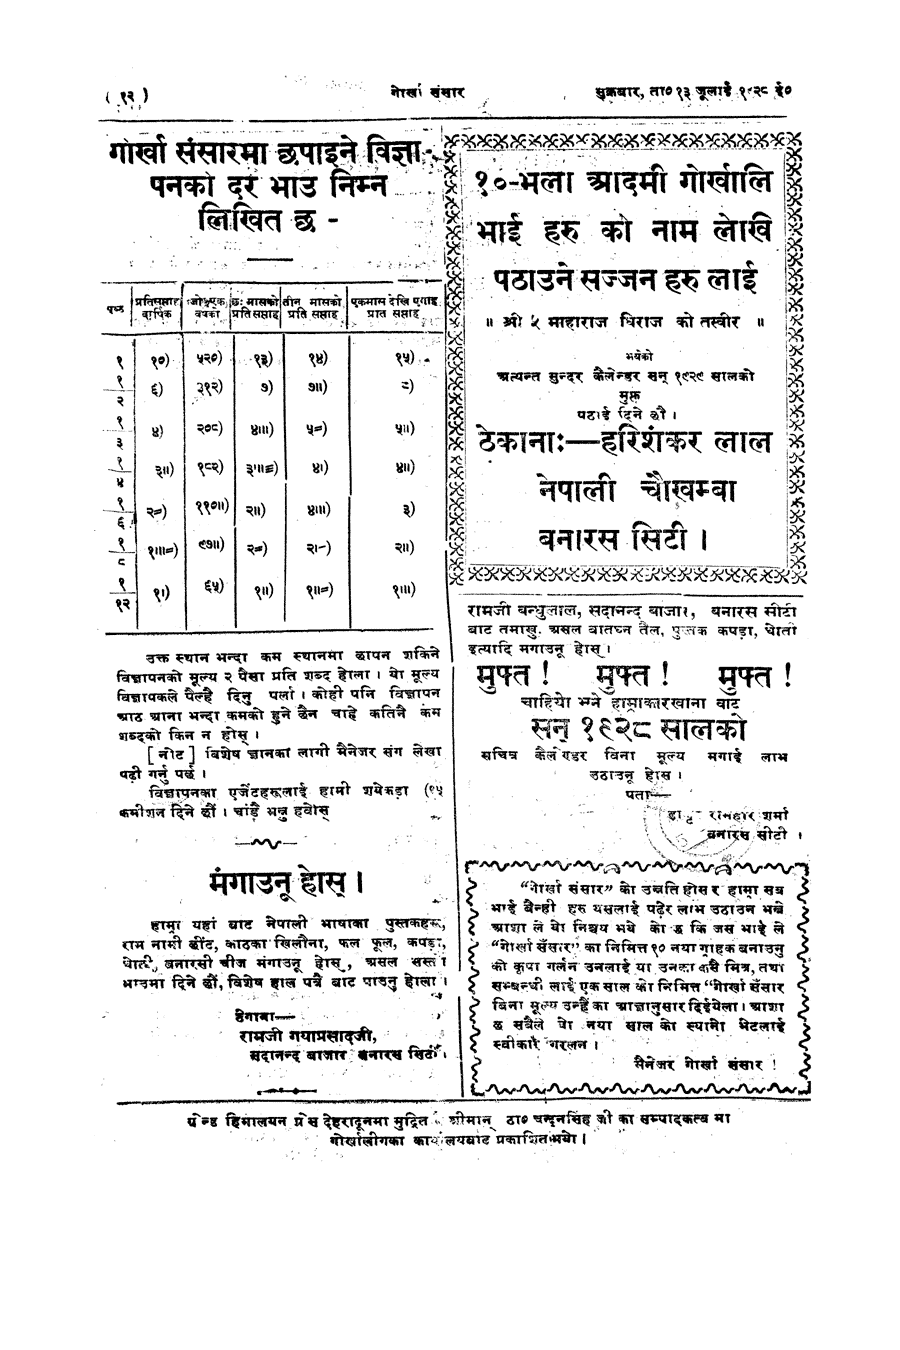 Gorkha Sansar, 13 July 1928, page 12